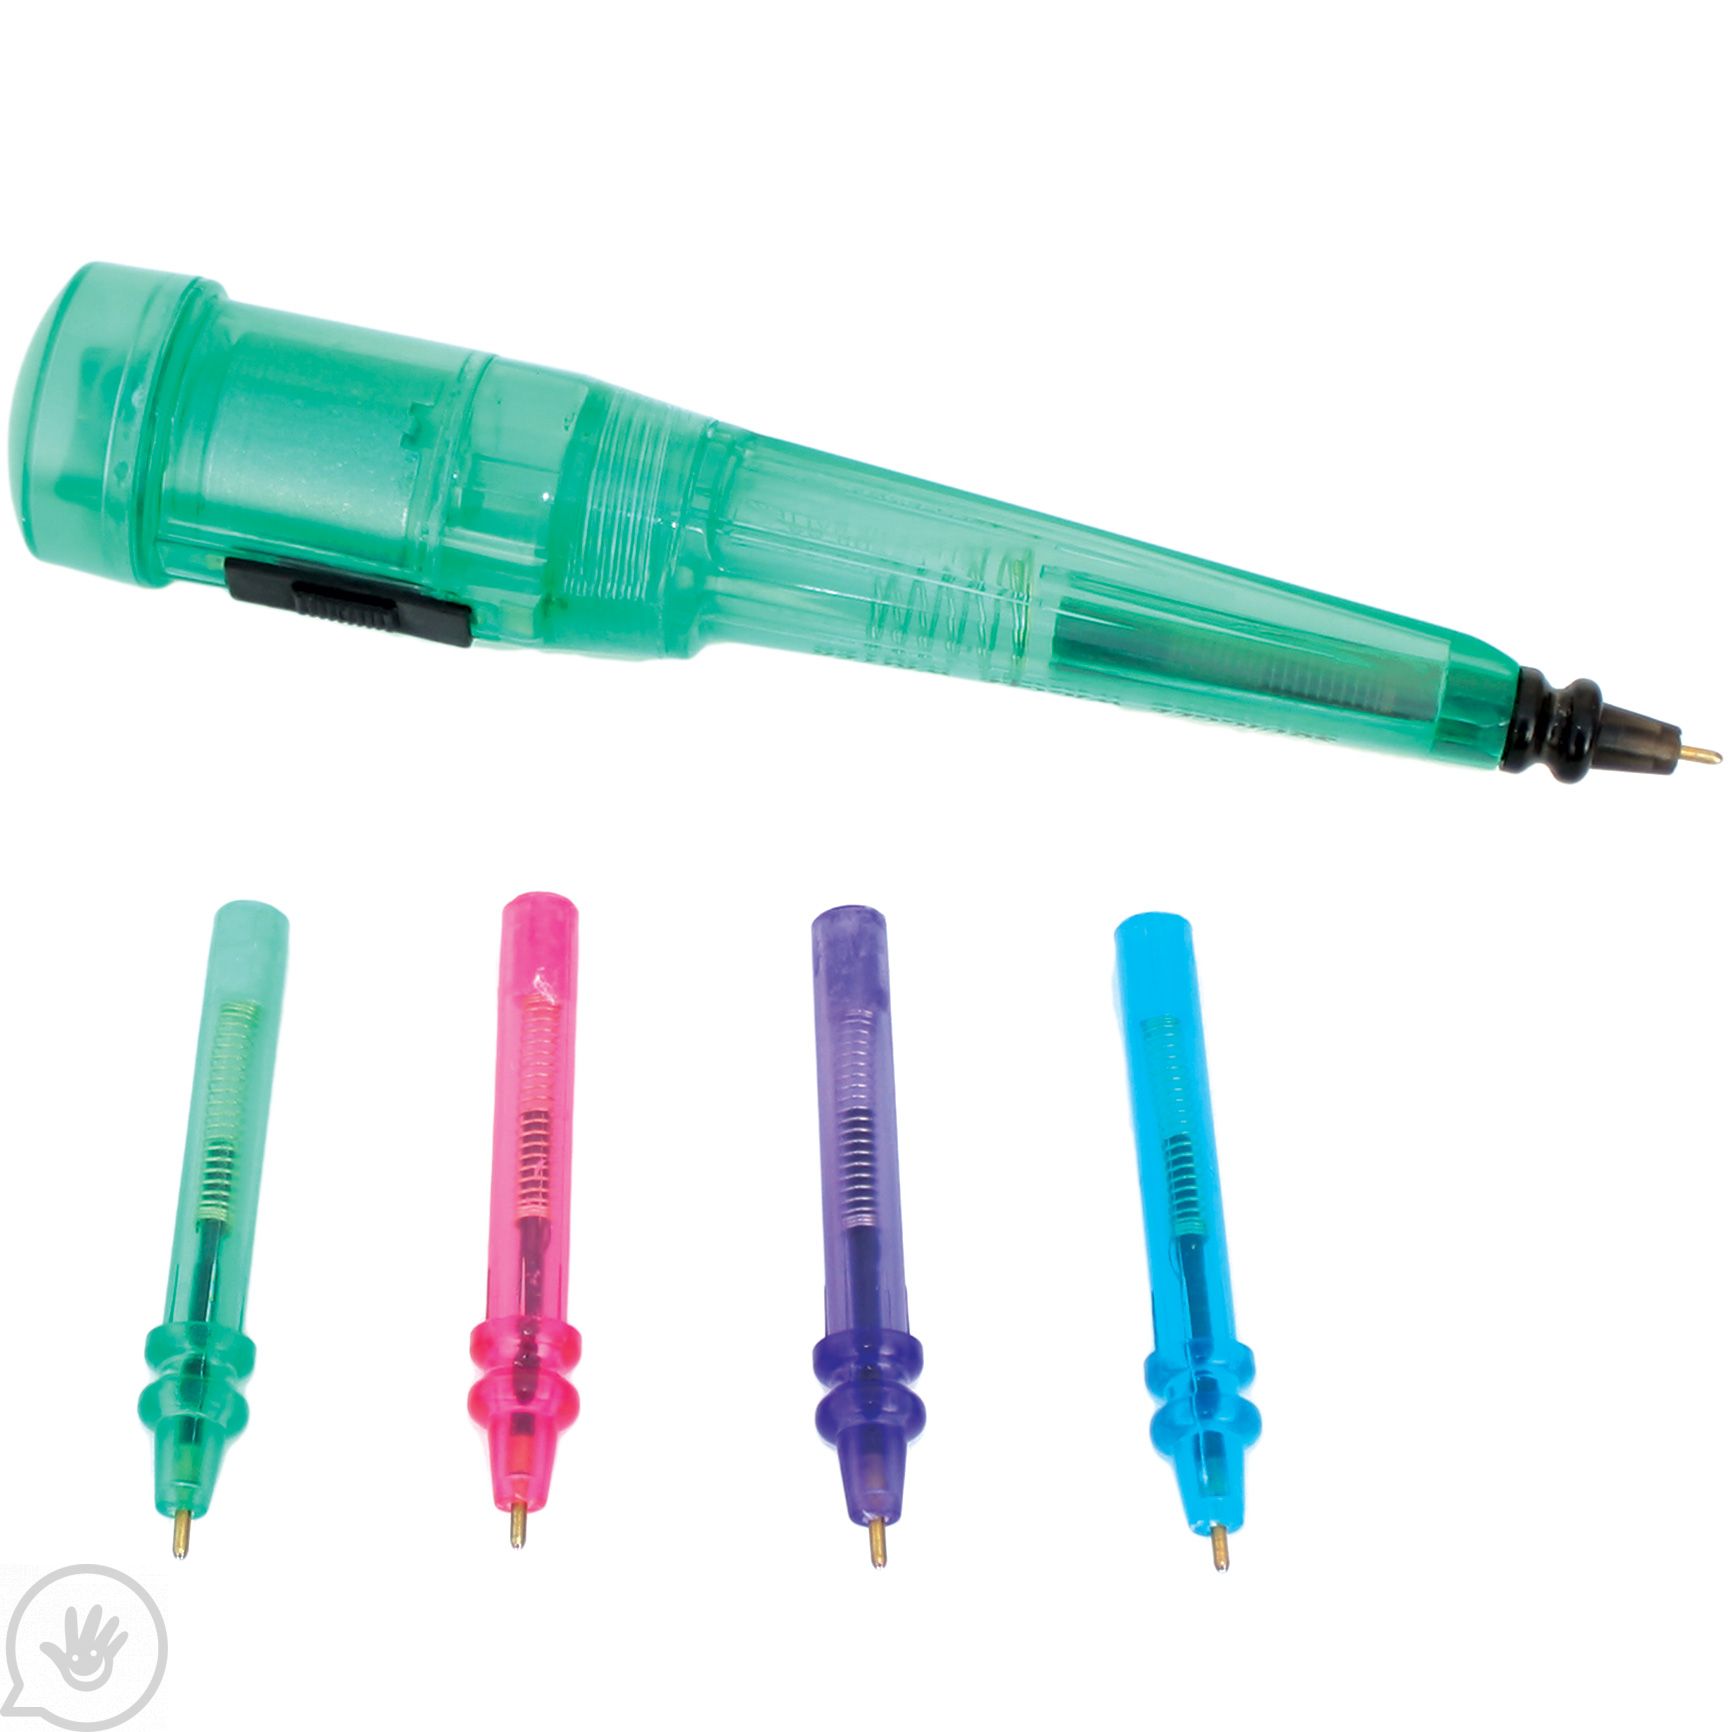 Fidget pen: ADHD product recommendation